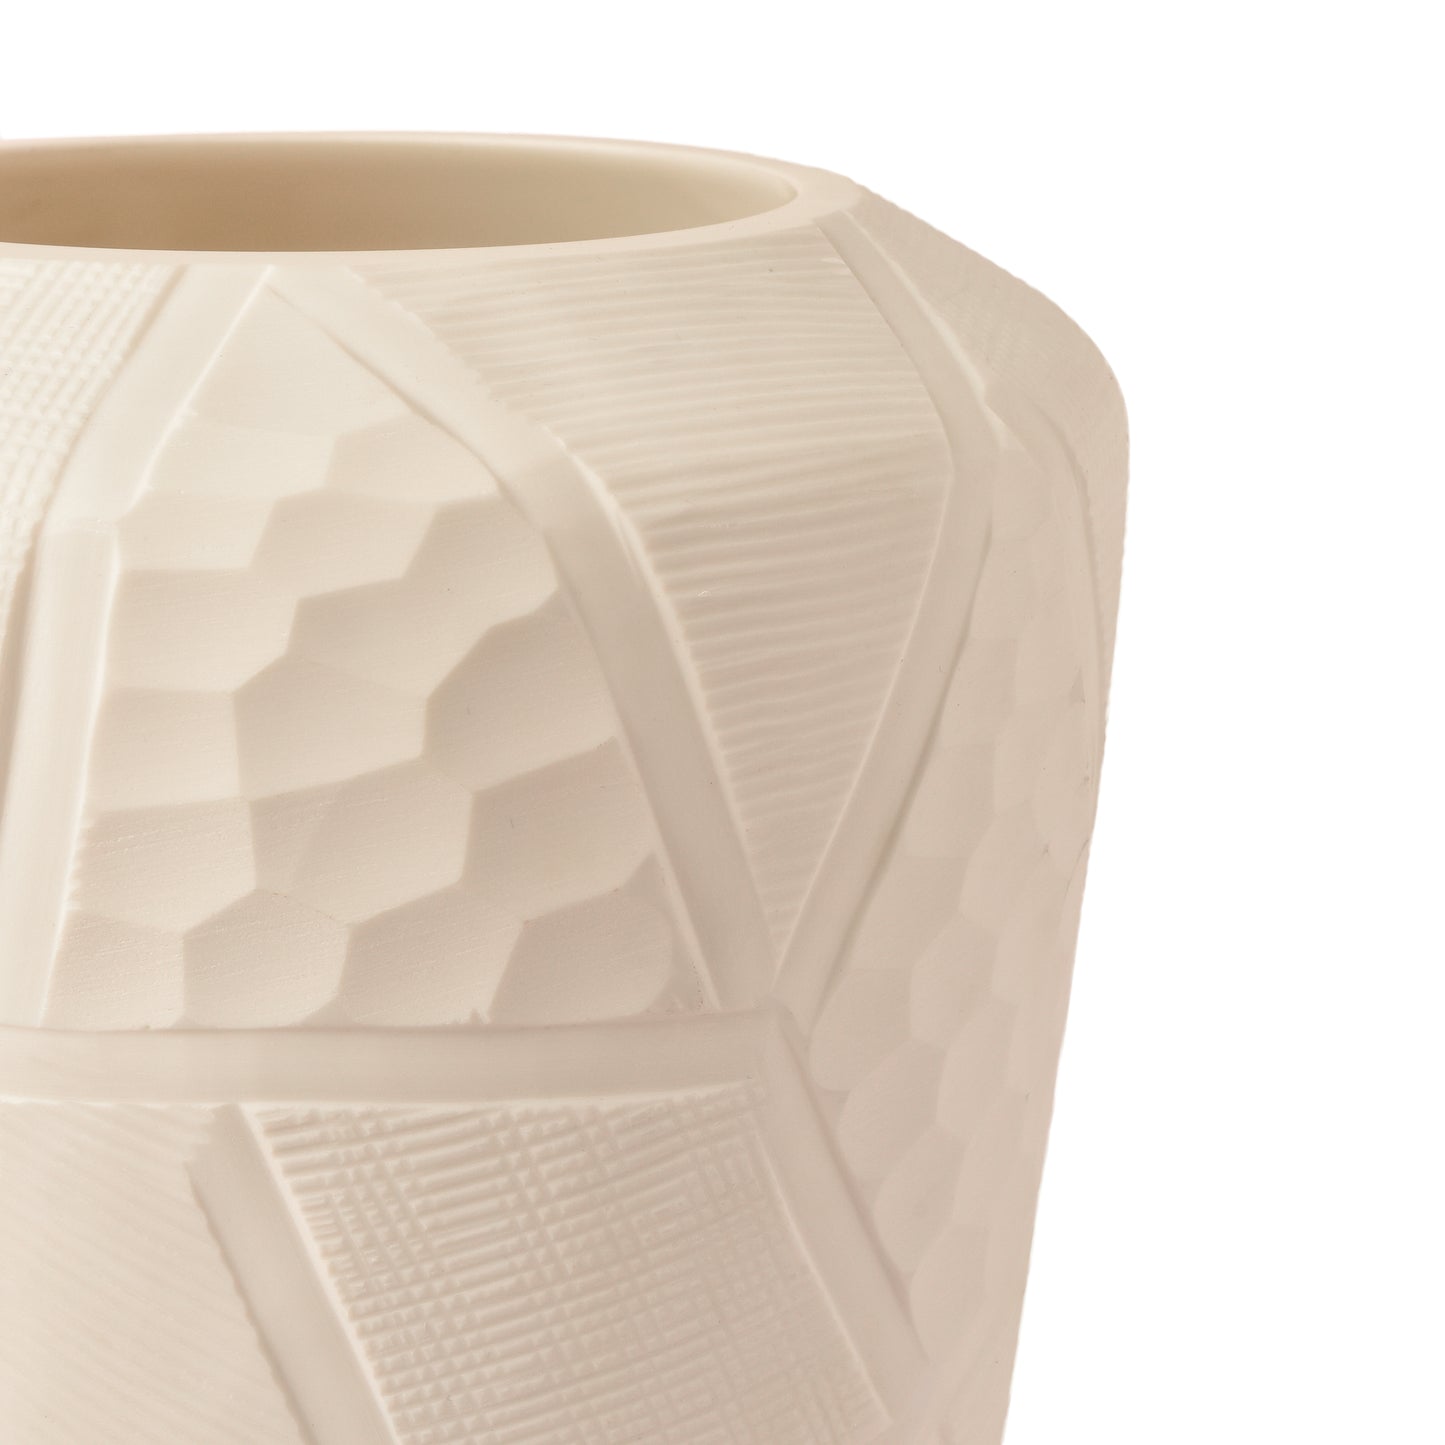 Handmade Creamie Clay Vase-HOMENEARTH